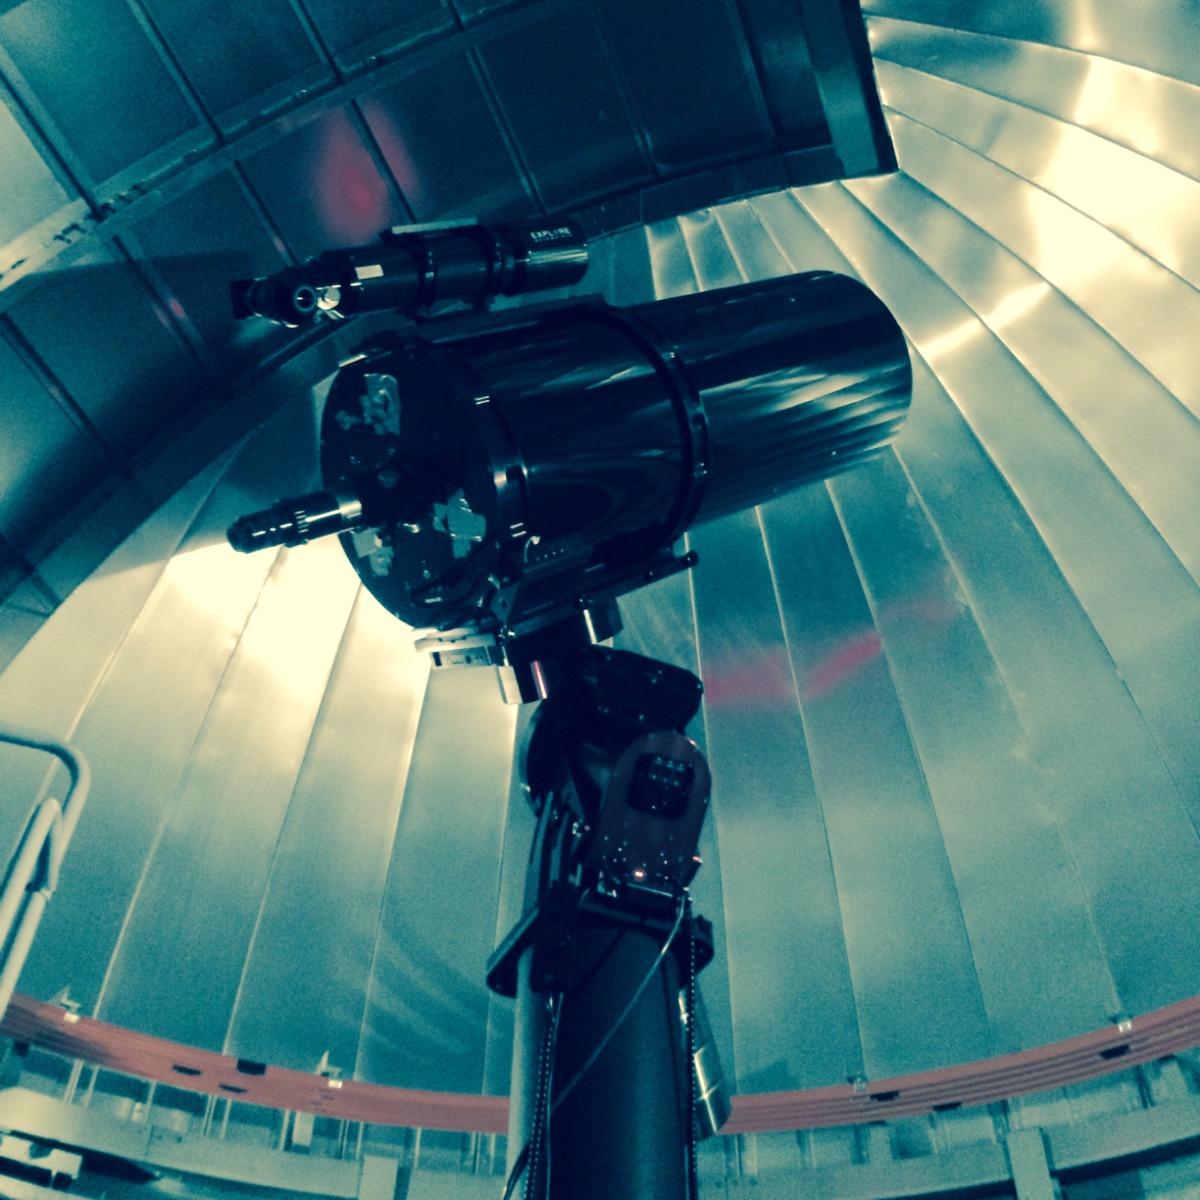 Bowman Observatory